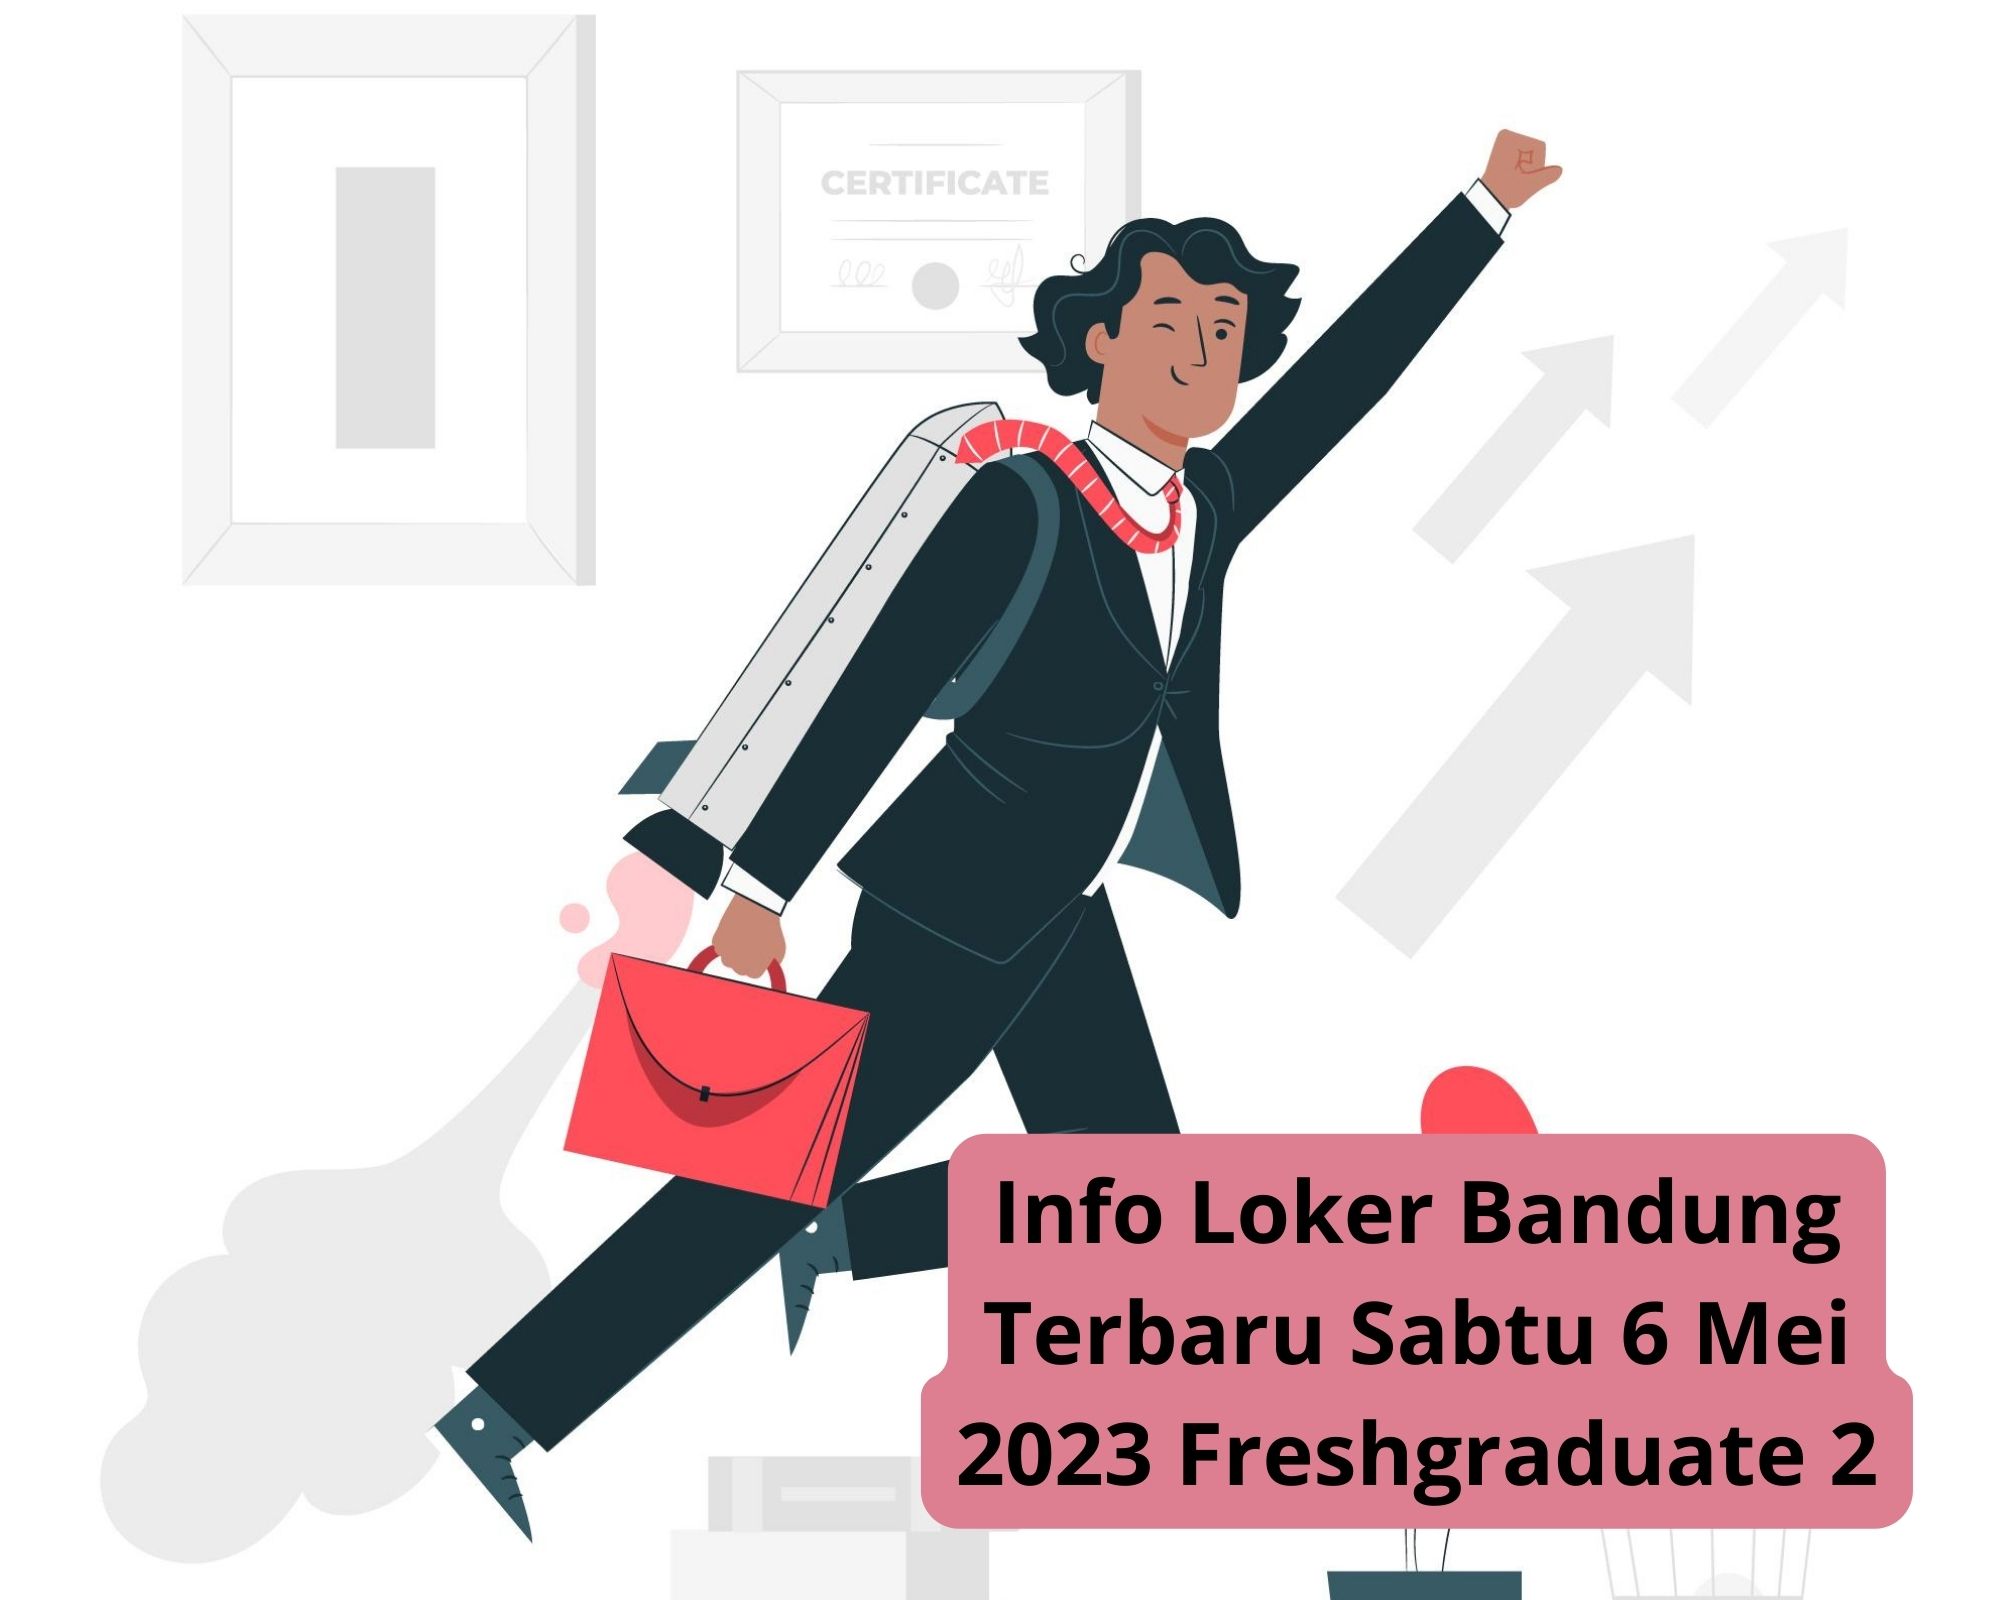 Info Loker Bandung Terbaru Sabtu 6 Mei 2023 Freshgraduate 2